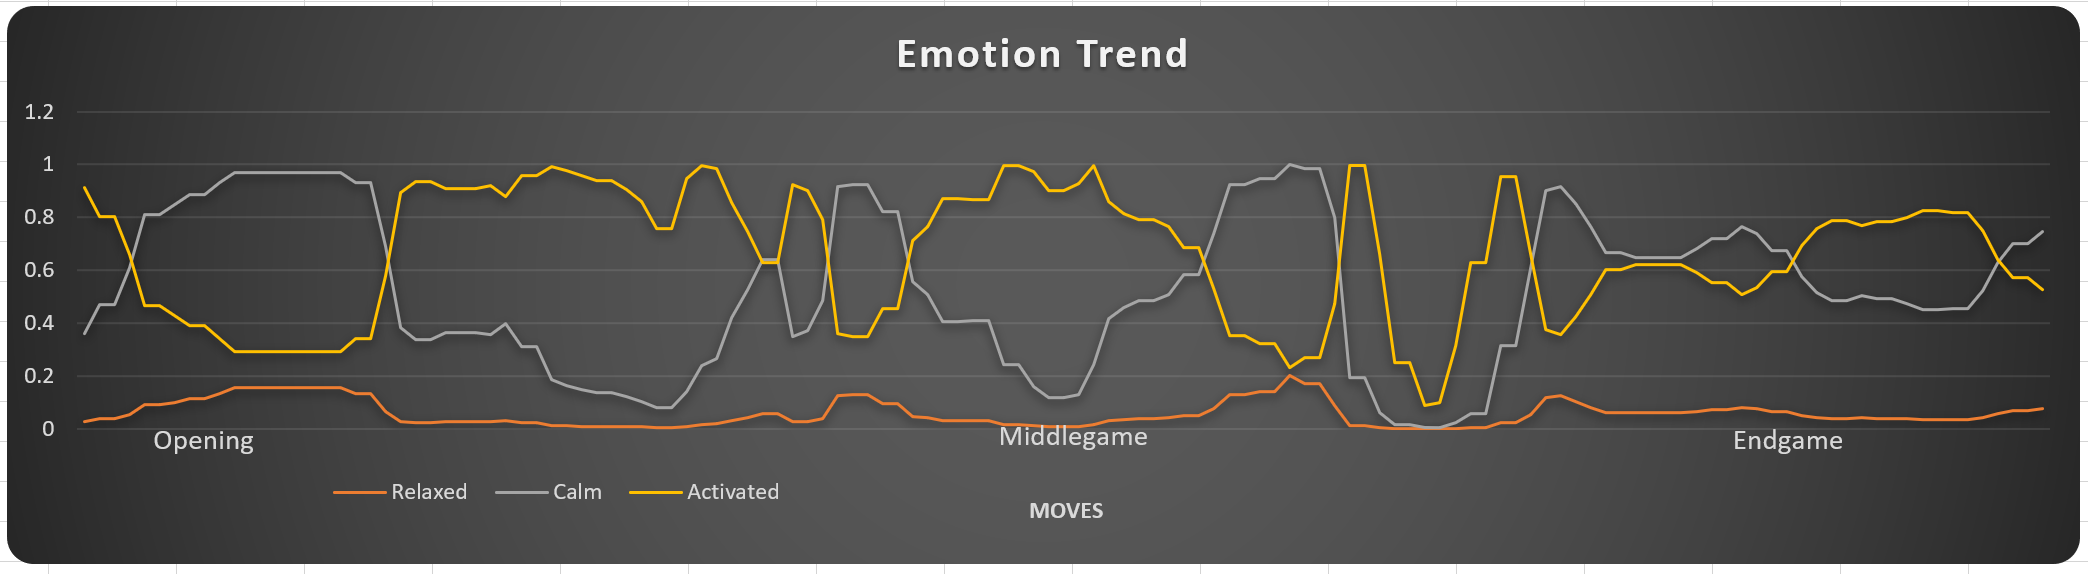 Emotion trend